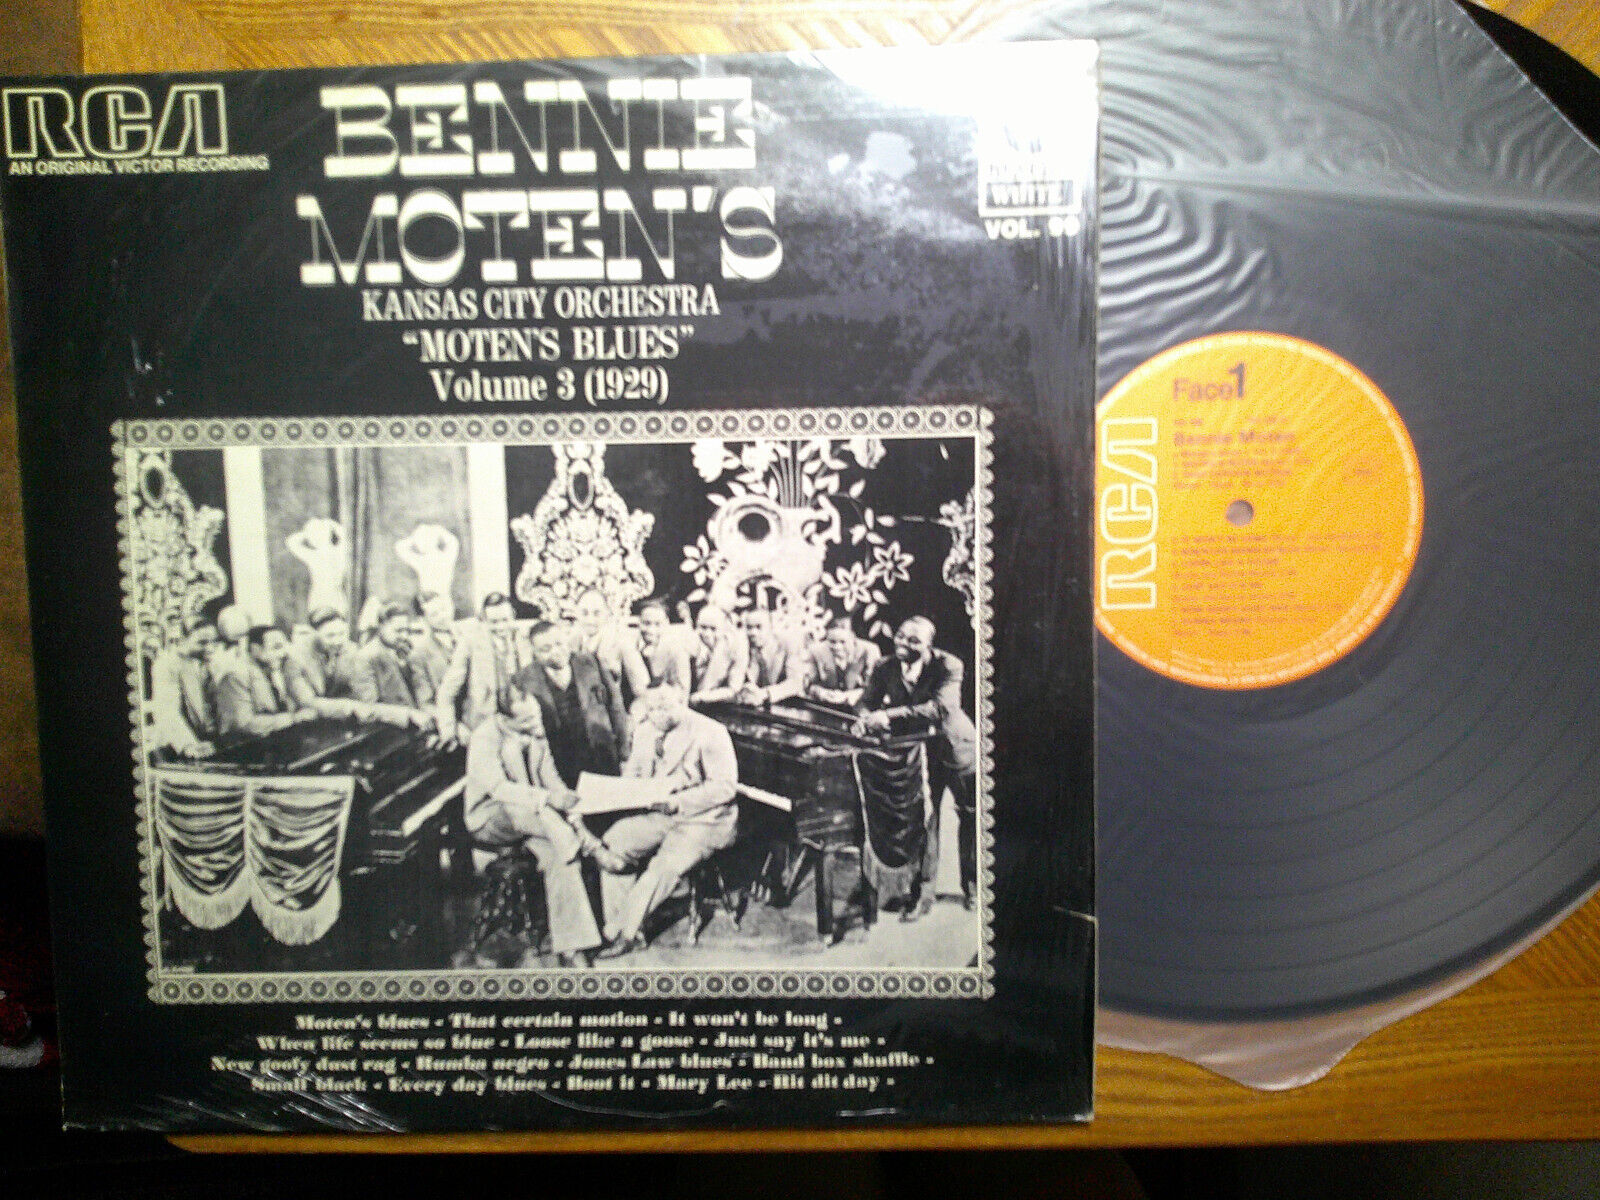 FRANCE RCA LP RECORD/BENNIE MOTEN/MOTEN'S BLUES/VOLUME 3 1929/NR MINT JAZZ